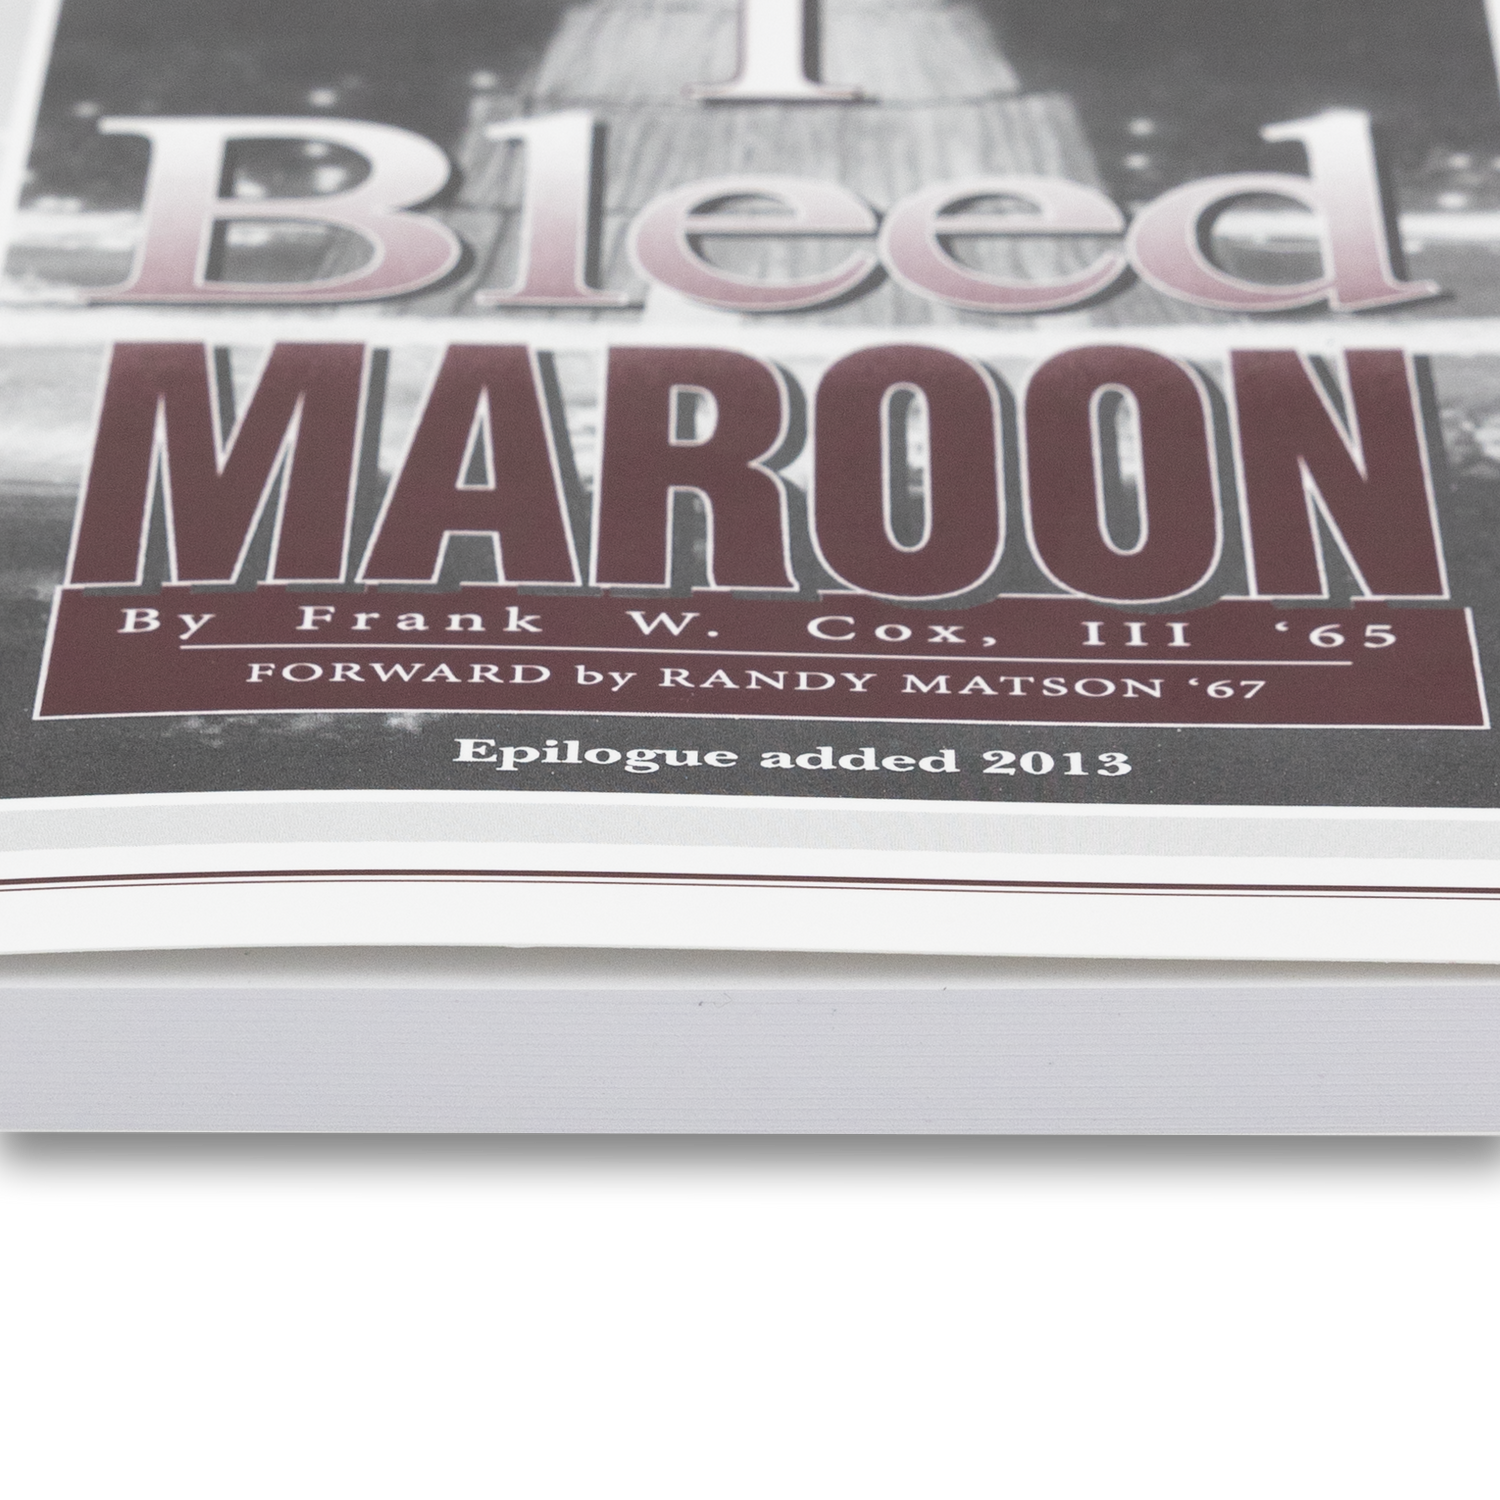 I Bleed Maroon Book By Frank Cox